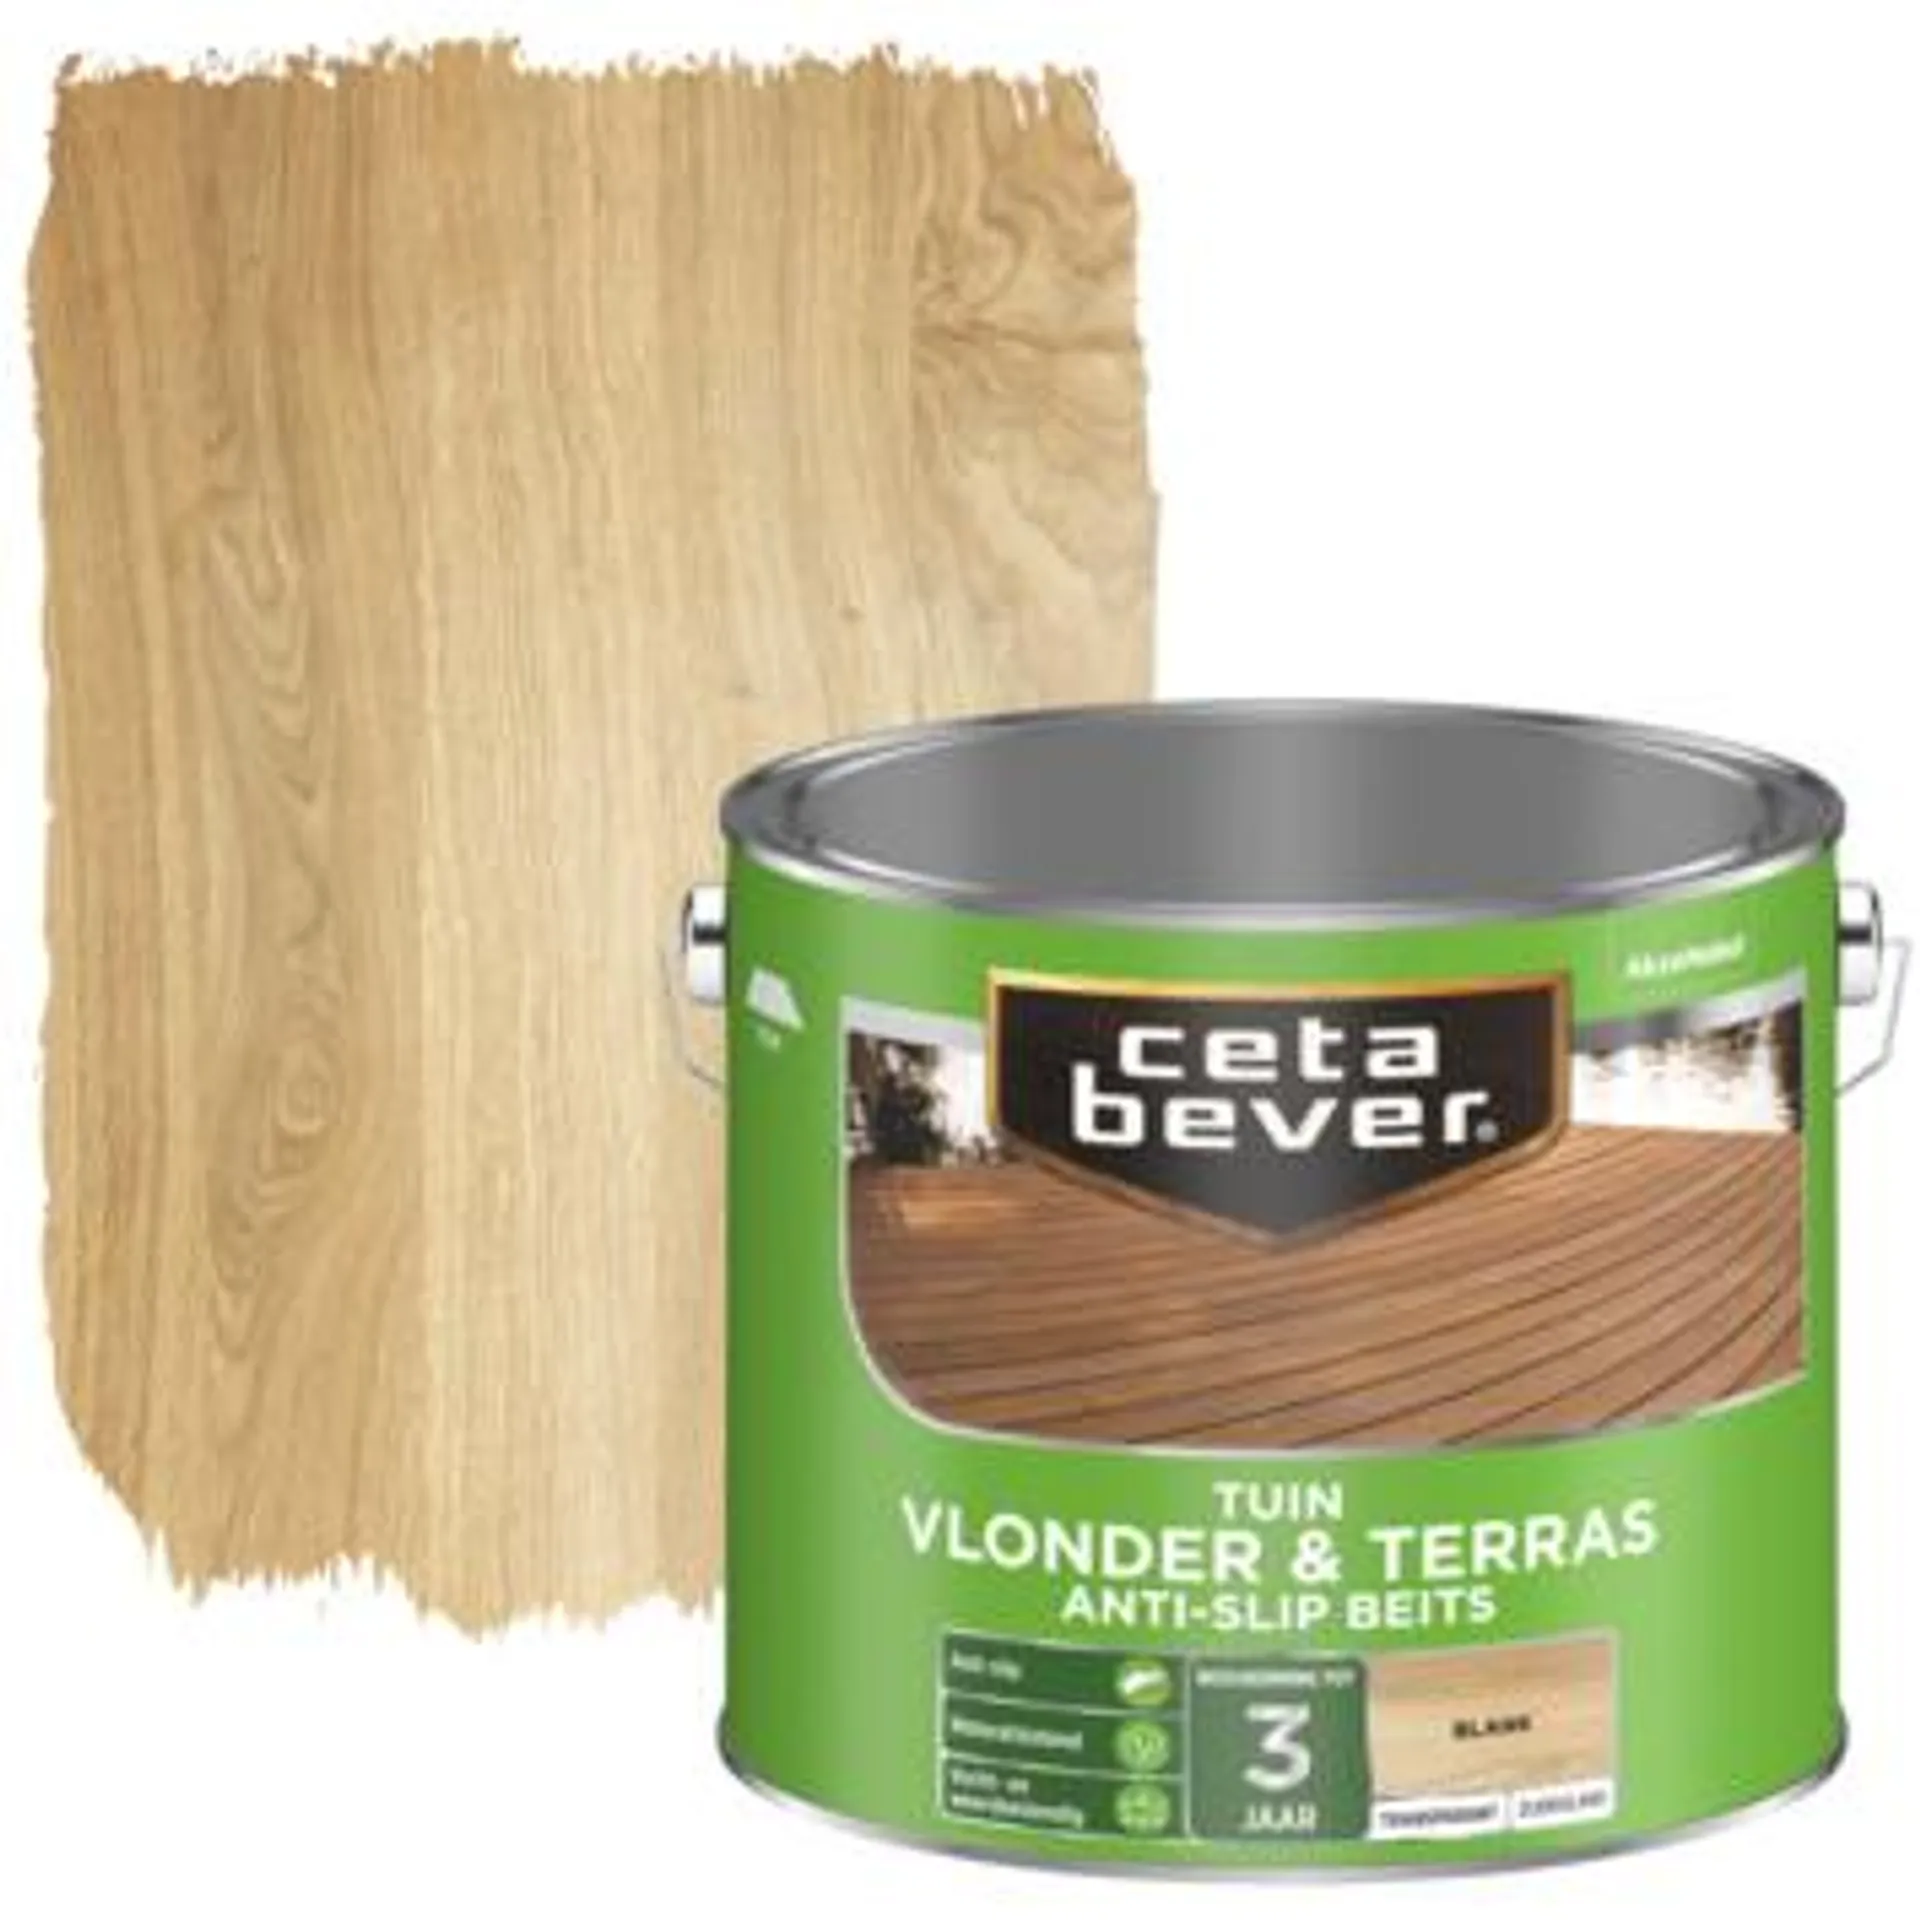 Cetabever vlonder & terras anti-slip beits kleurloos 2,5 liter